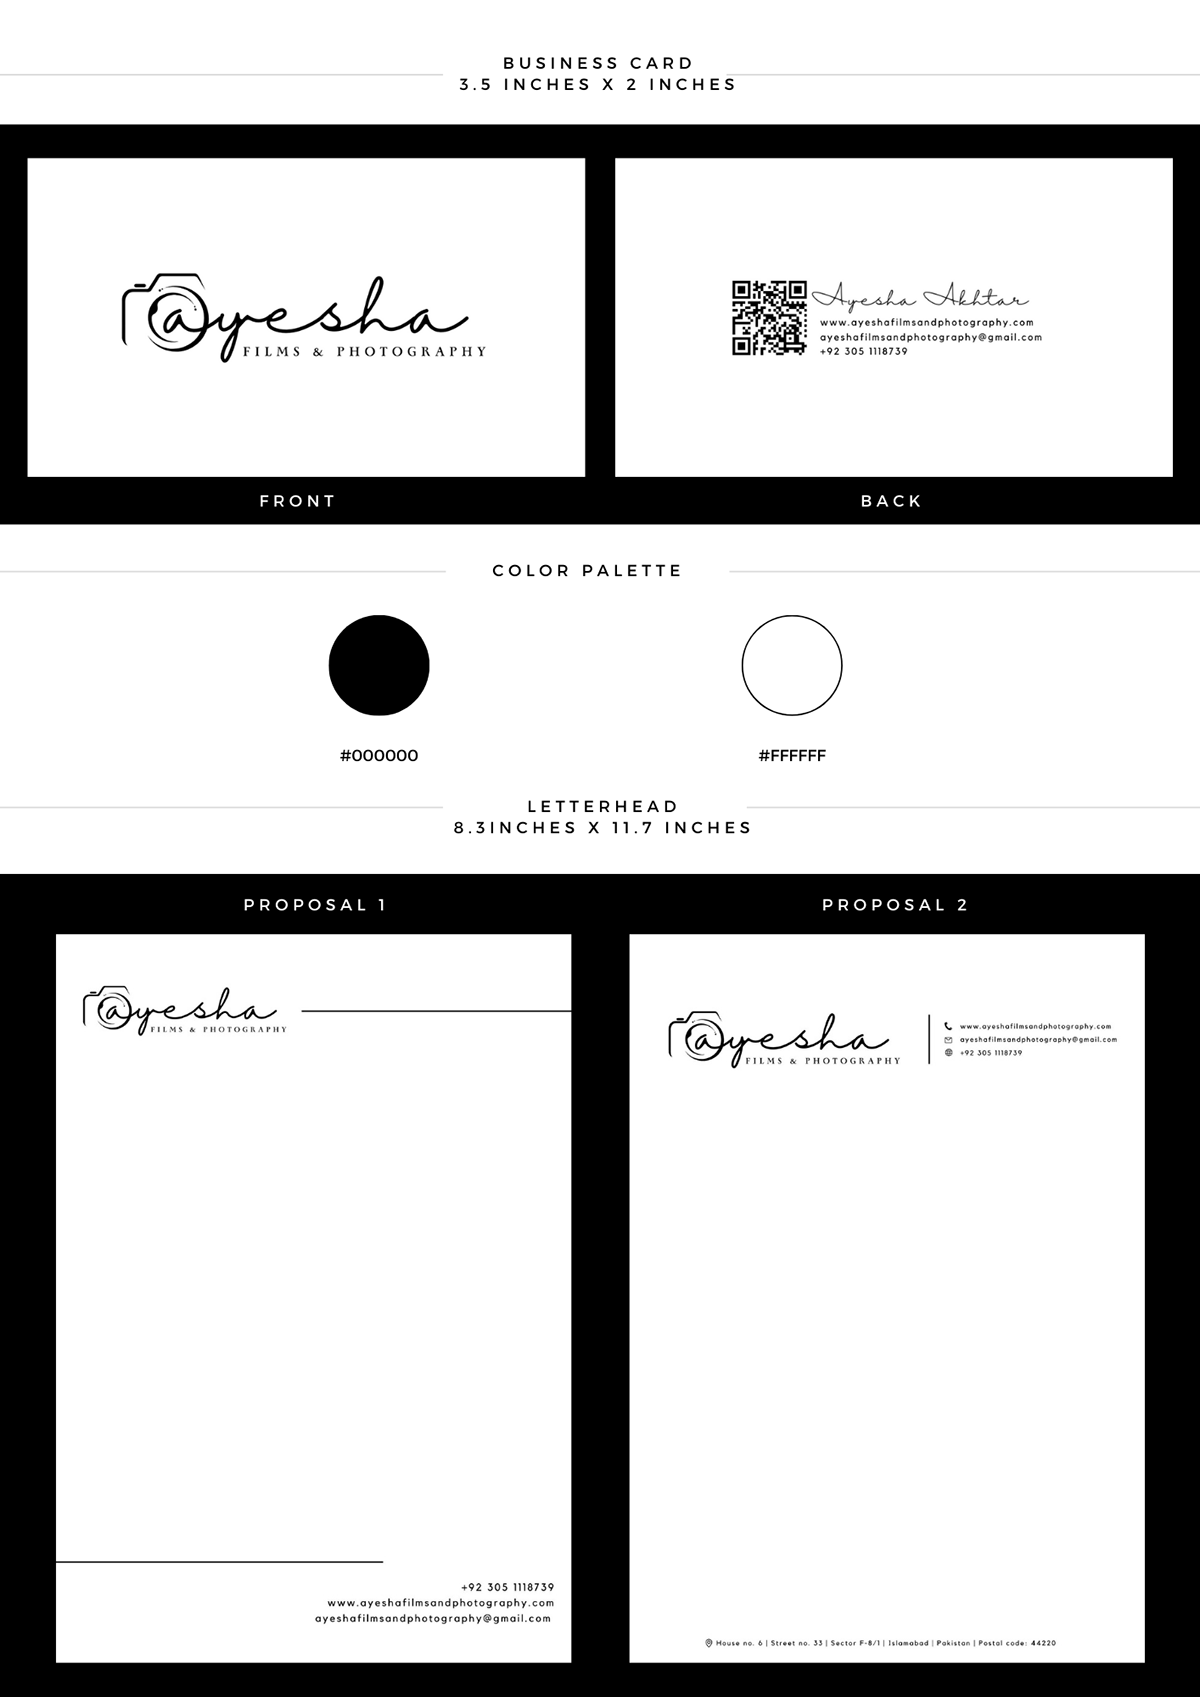 Logo Design minimalist modern monochrome graphic design  brand identity business card Advertising  Photography  designer